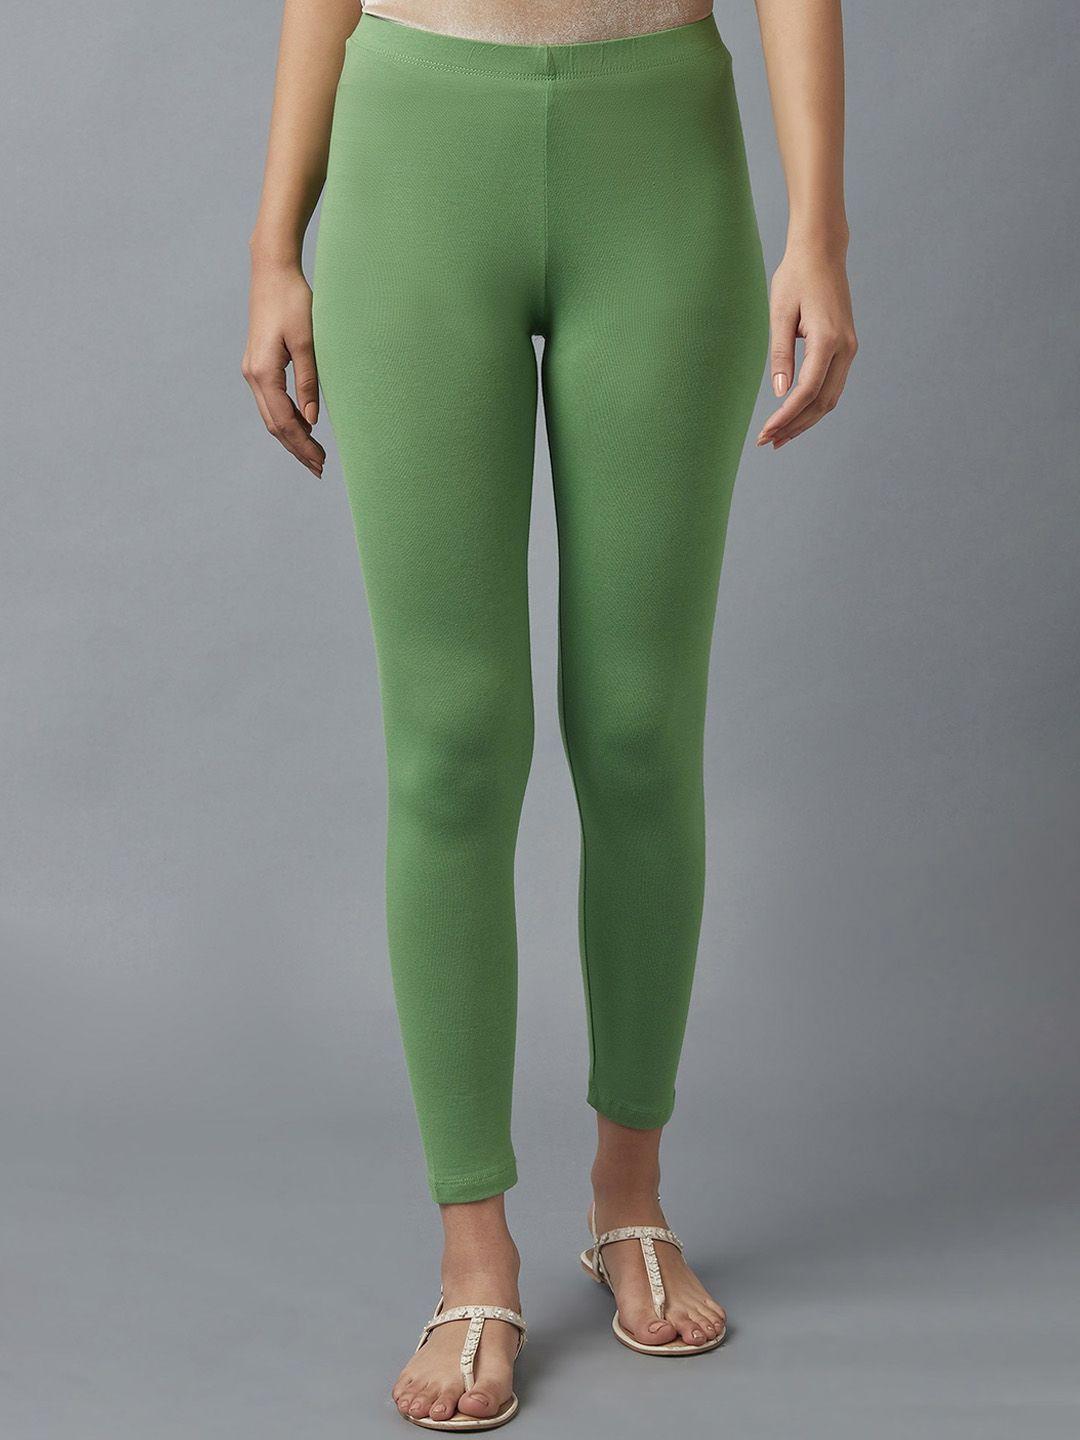 elleven women green solid ankle length leggings